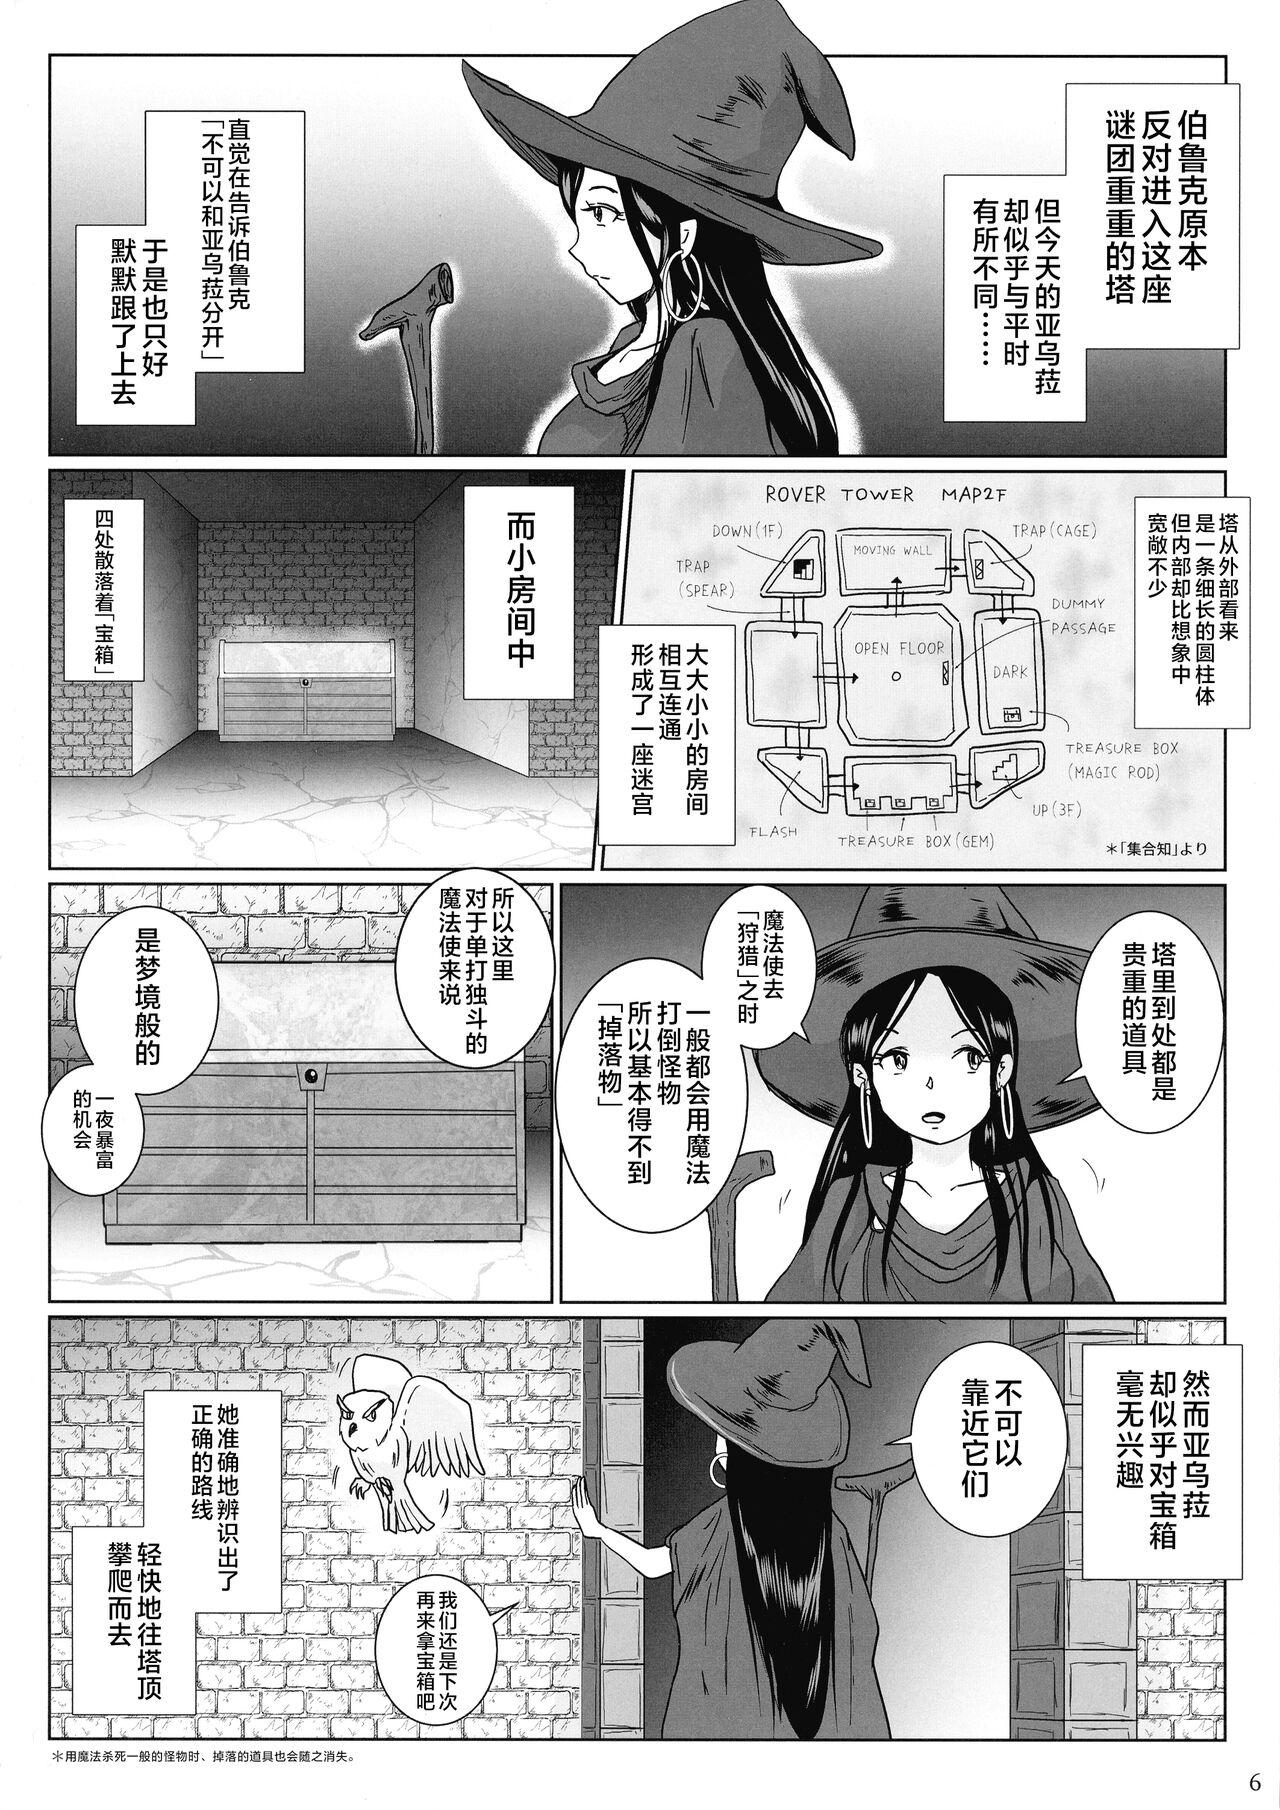 Foreskin Samayoeru Tou no Maru no Mimic - Original Eng Sub - Page 6